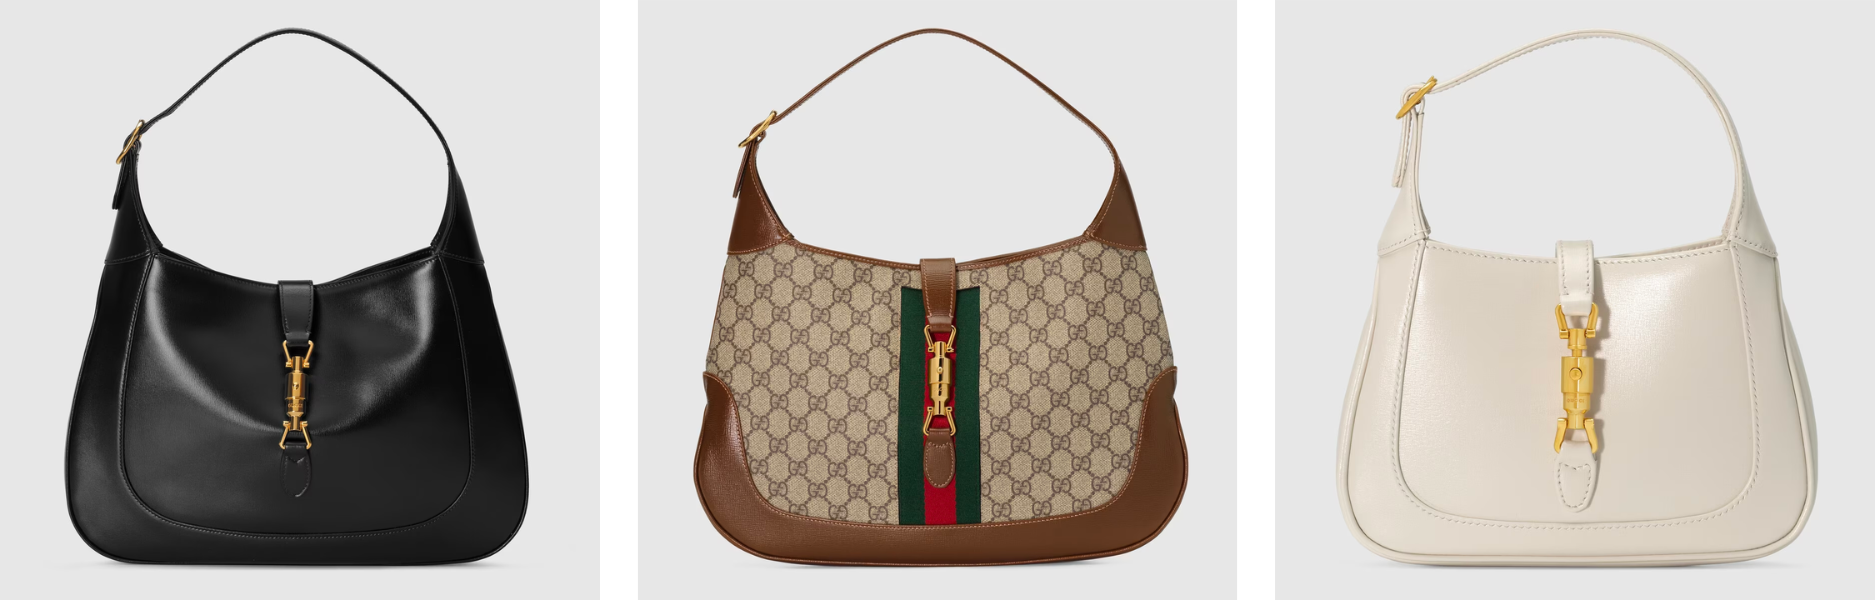 Gucci Jackie Bag - Iconic Purses - Style.com